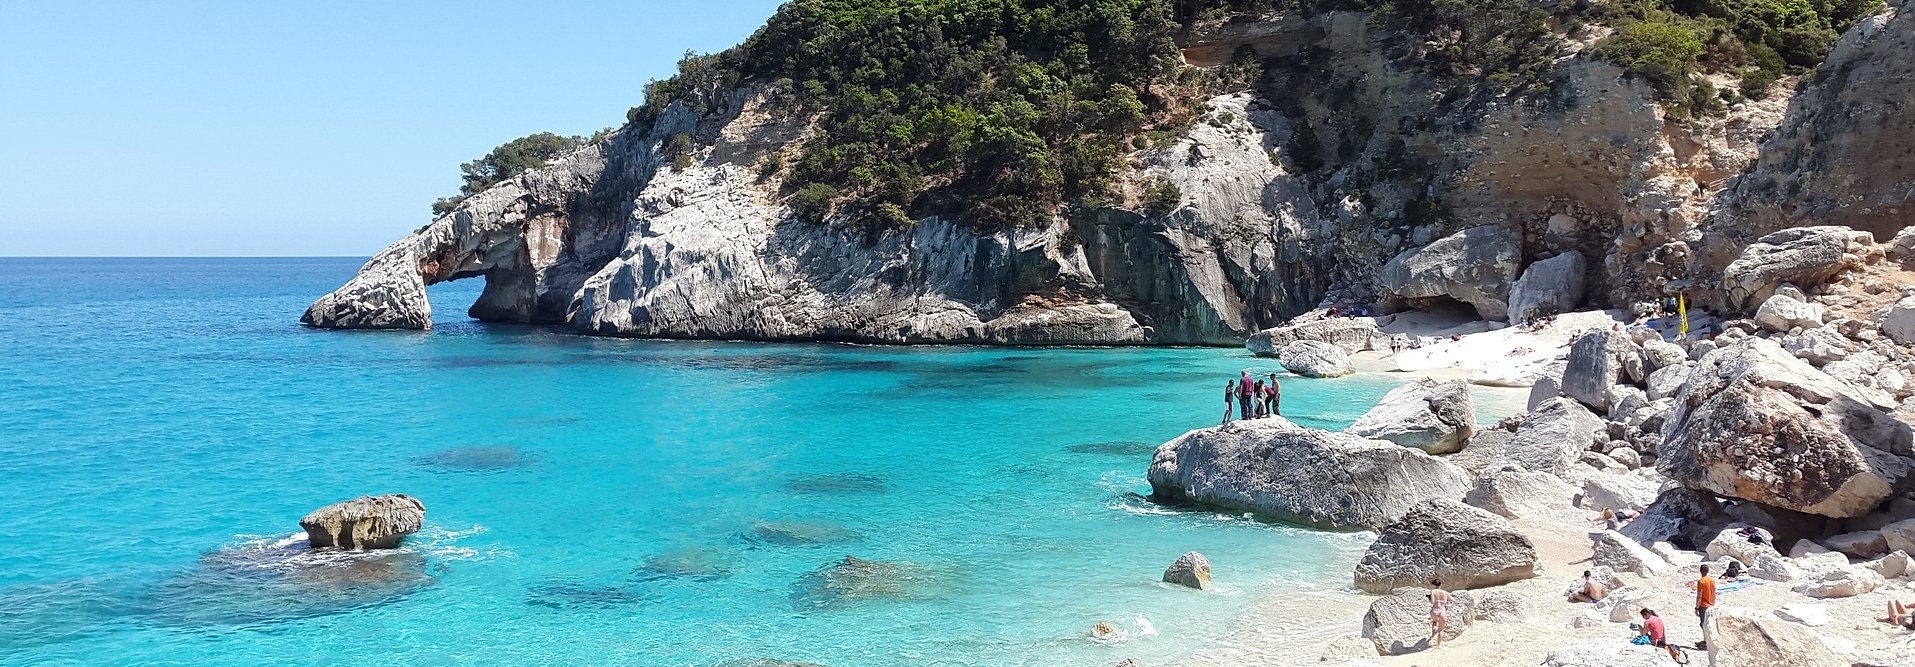 Sardinia|サルデーニャ島